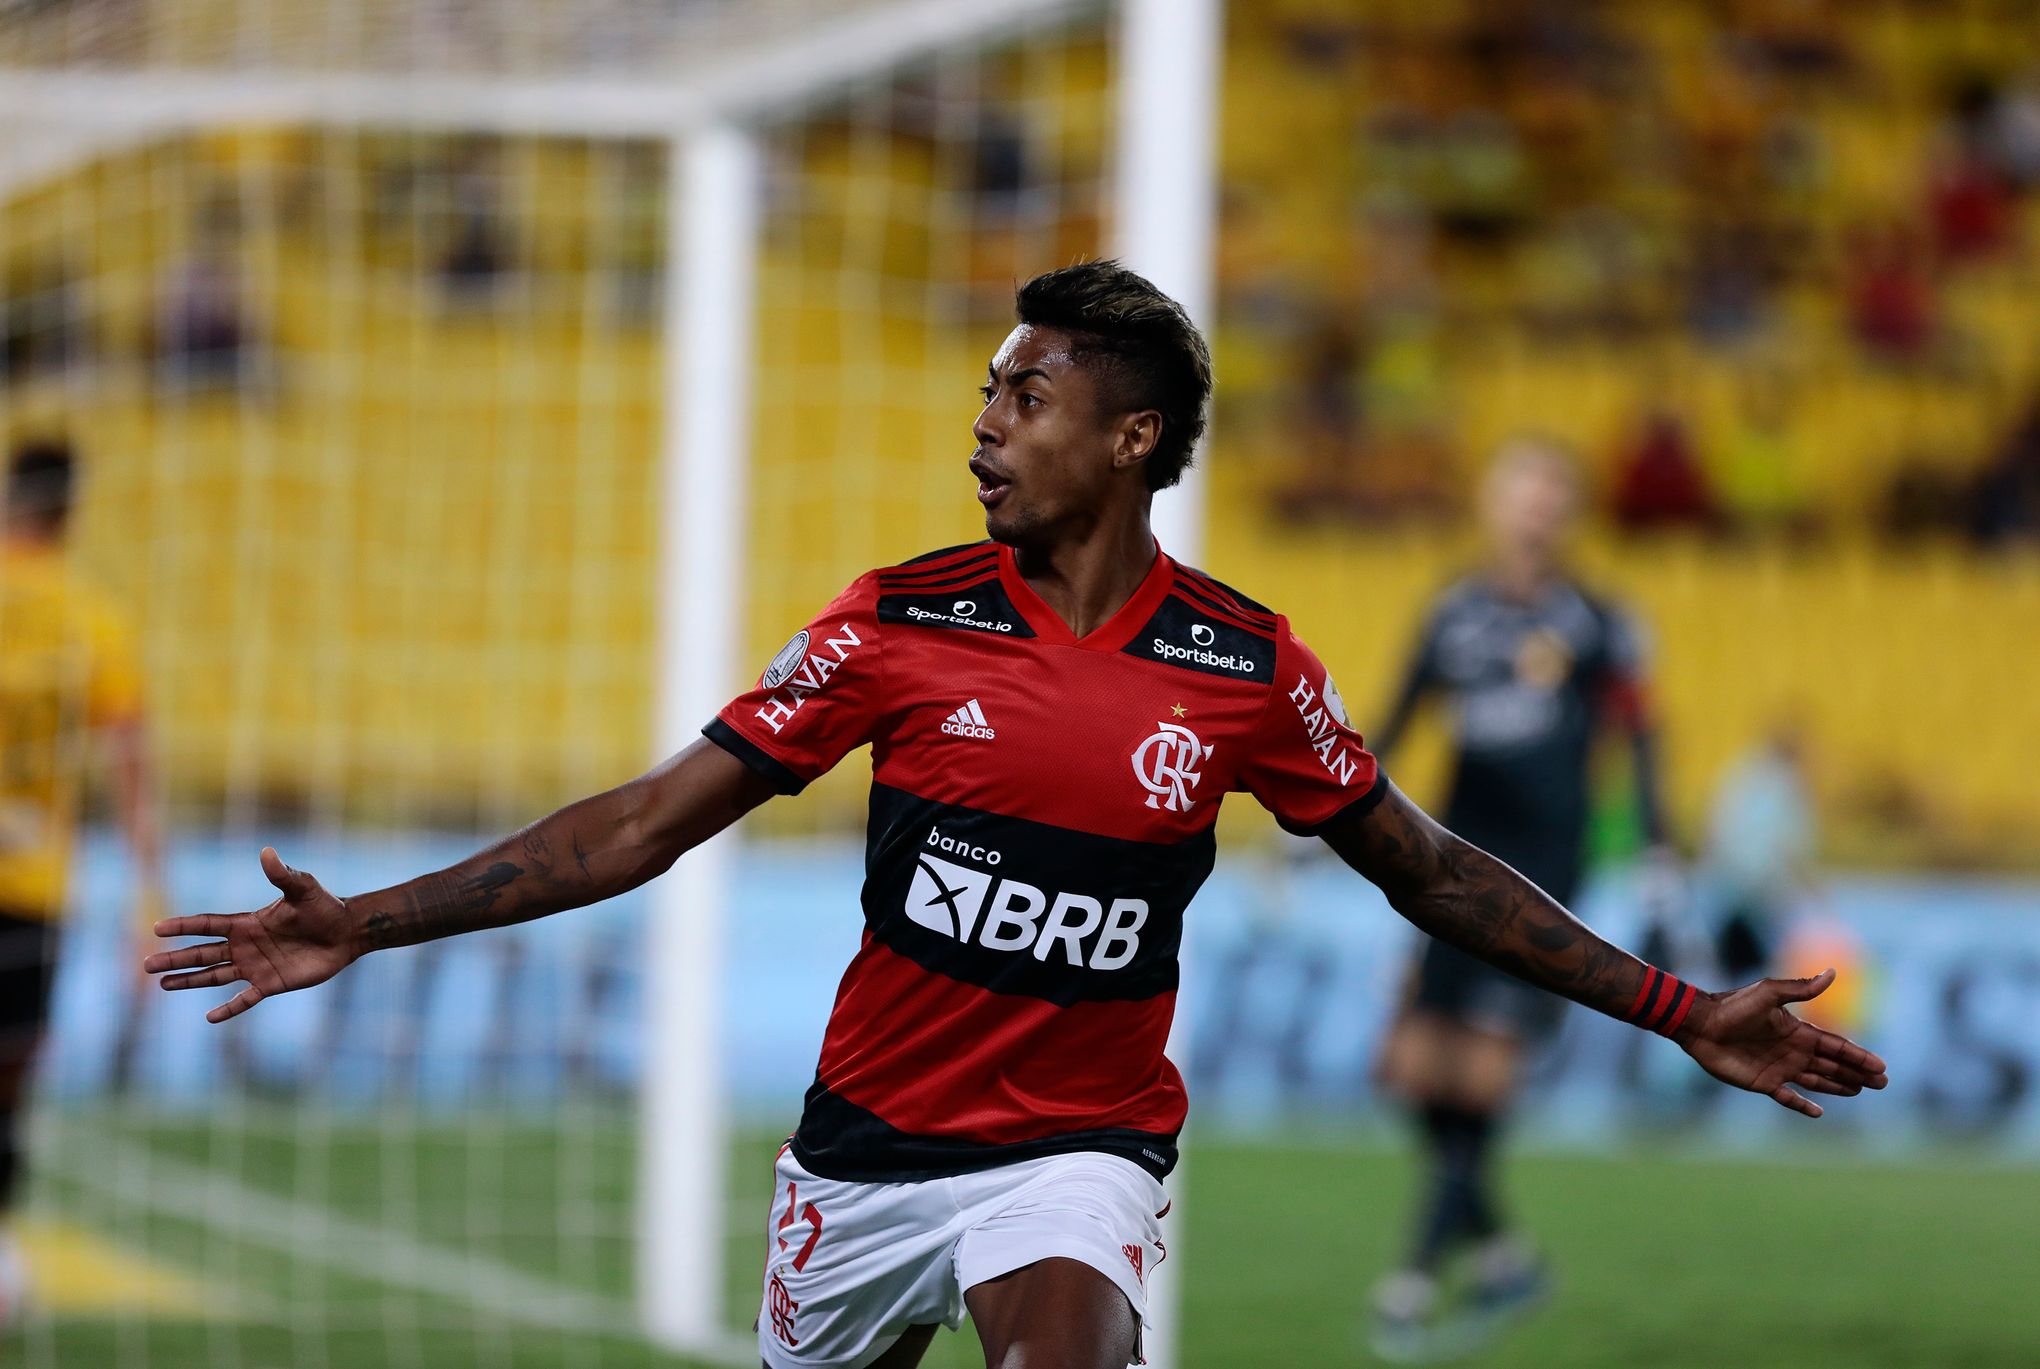 Brazil's Flamengo wins Copa Libertadores for 3rd time